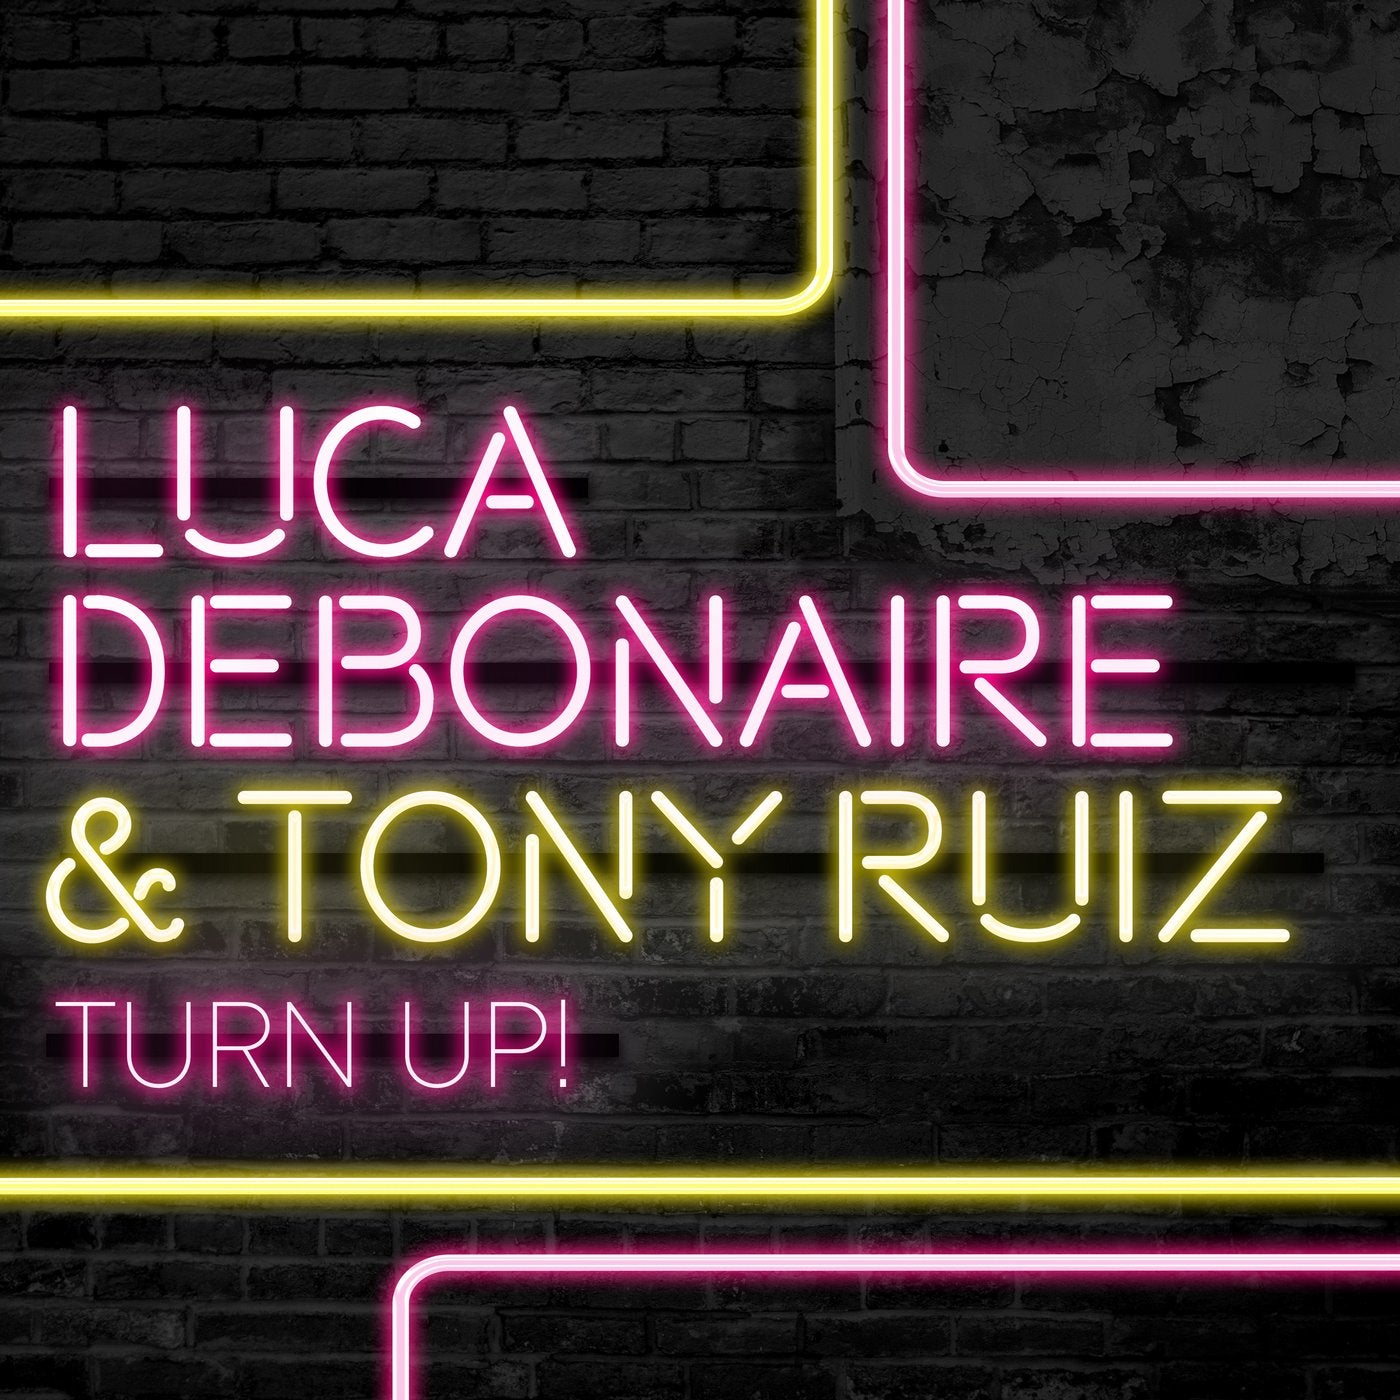 Turn Up!